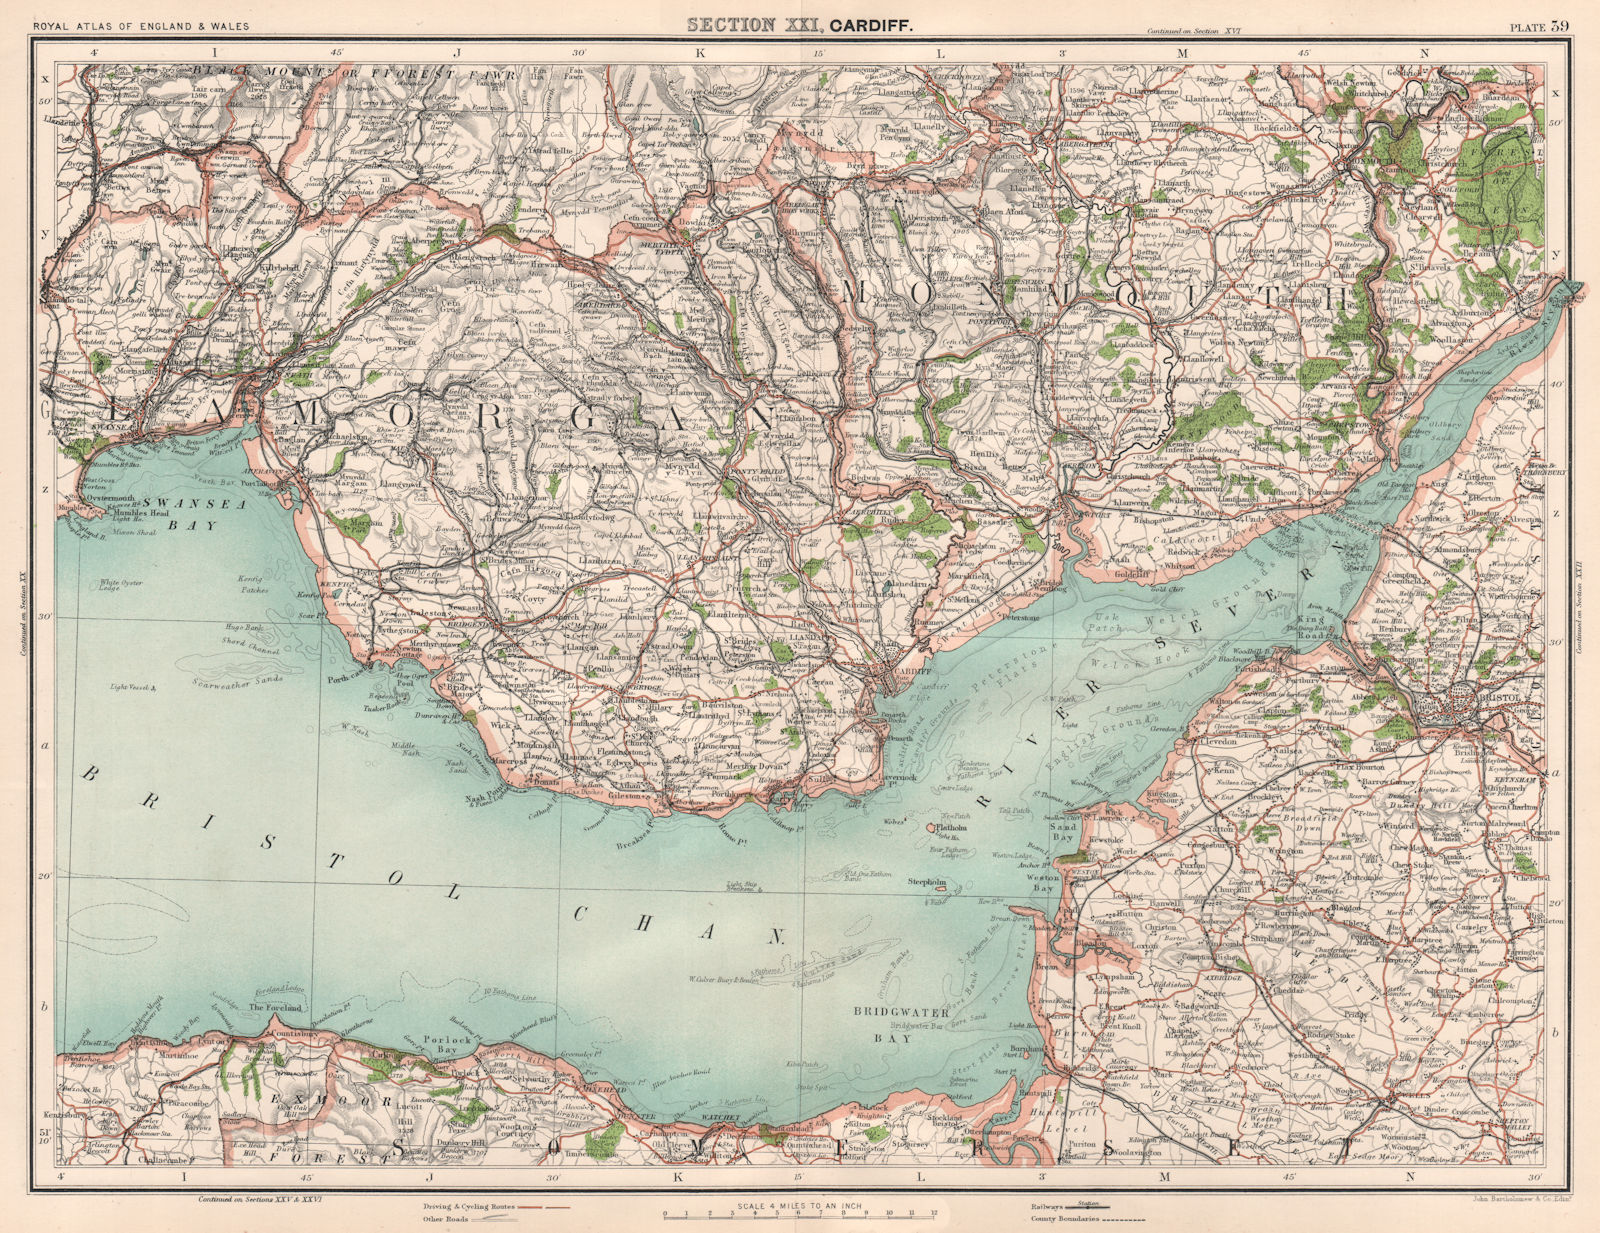 SEVERN ESTUARY / BRISTOL CHANNEL. South Wales valleys. Somerset coast 1898 map